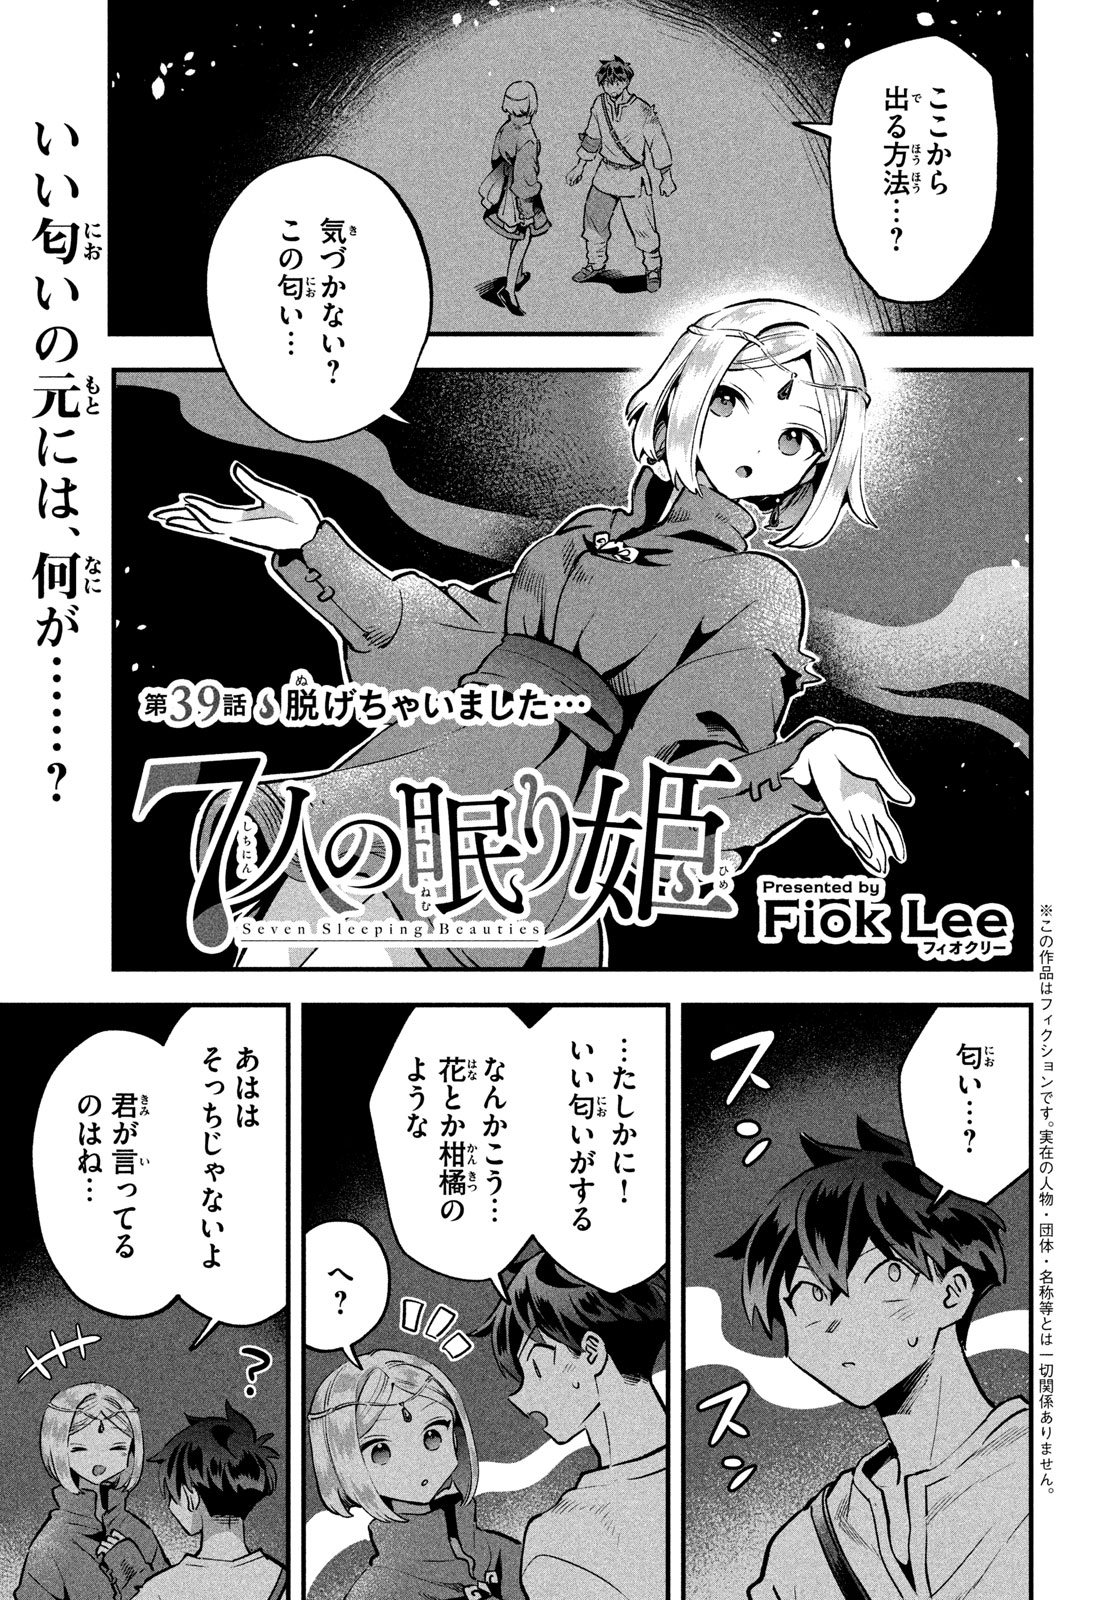 7-nin no Nemuri Hime - Chapter 39 - Page 1